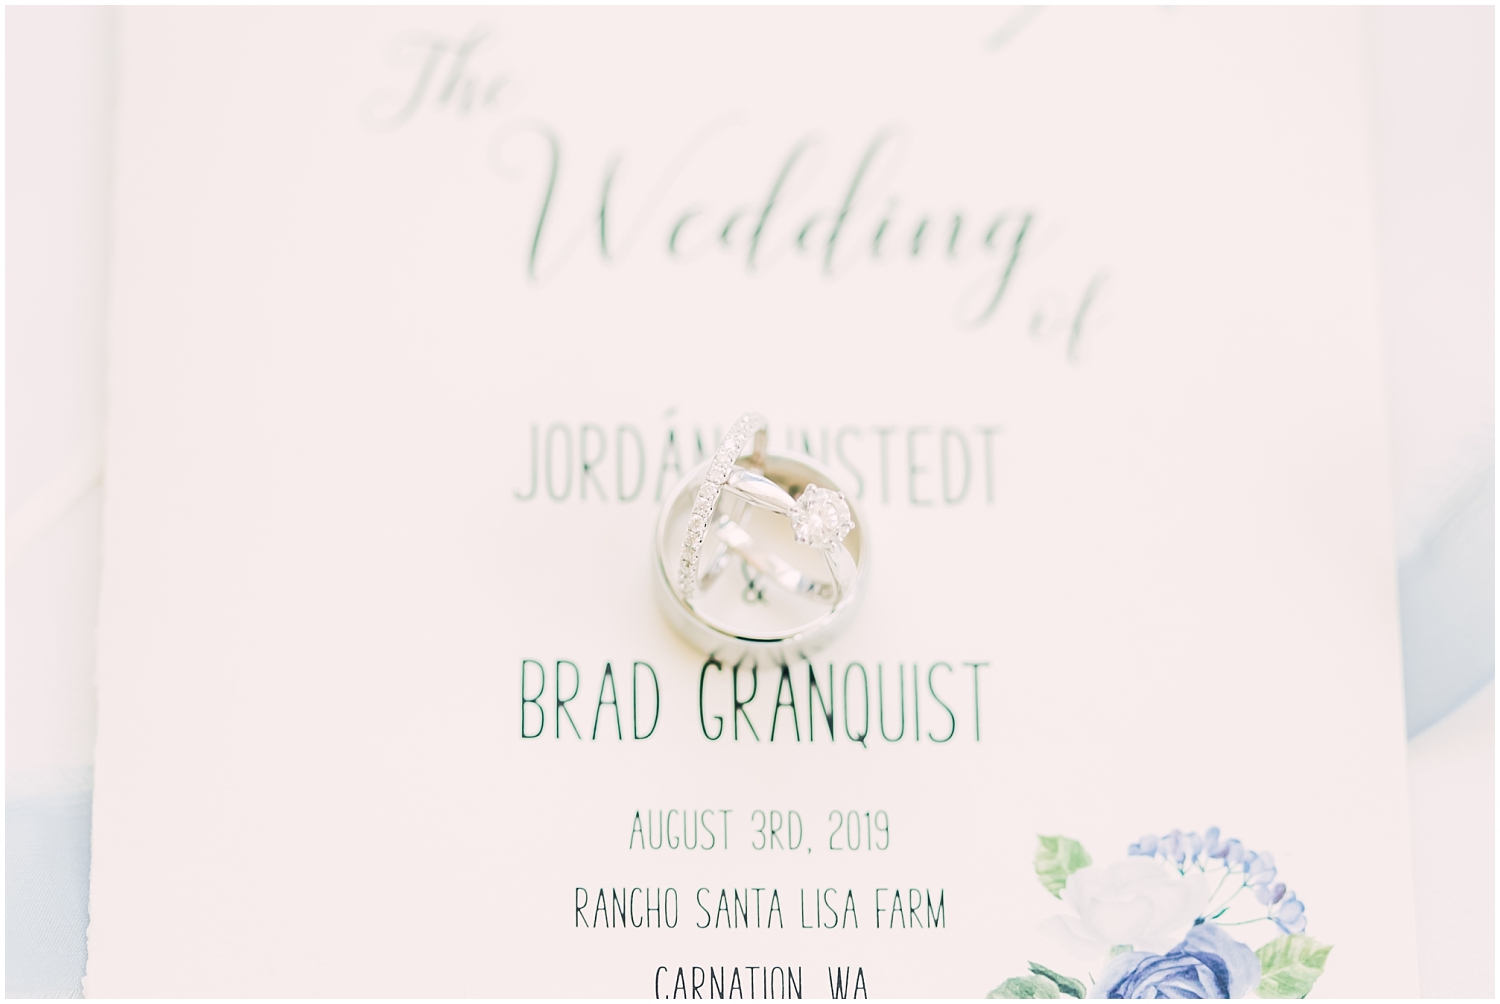 Rancho Santa Lisa Farm Wedding | Brad & Jordan